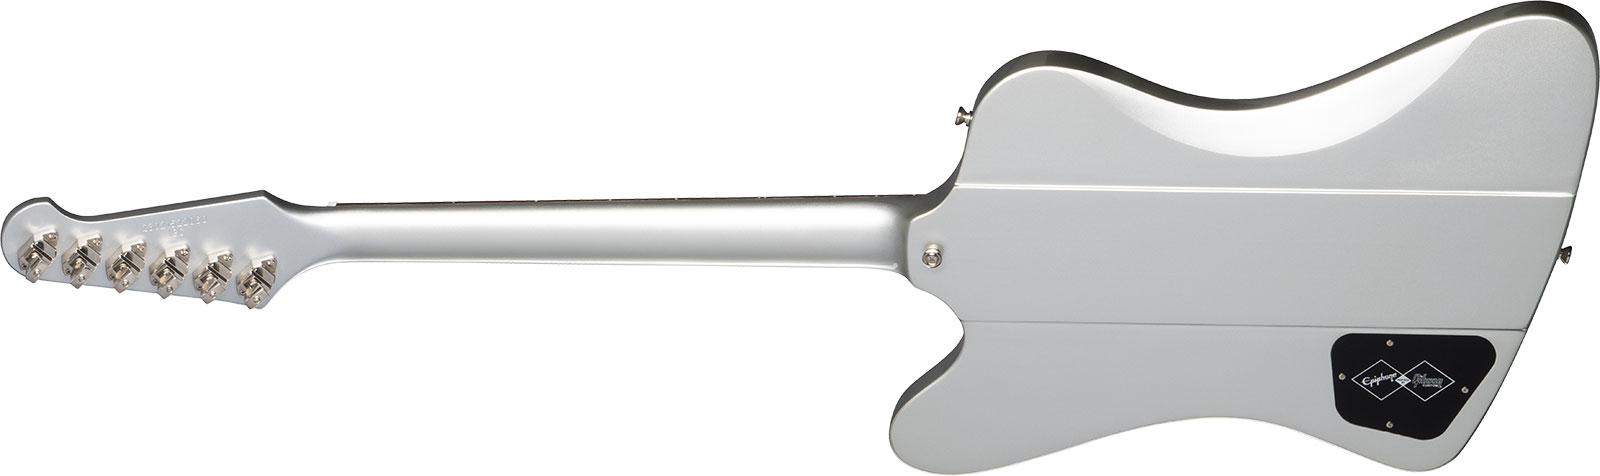 Epiphone Firebird I 1963 Inspired By Gibson Custom 1mh Ht Lau - Silver Mist - Retro-Rock-E-Gitarre - Variation 1